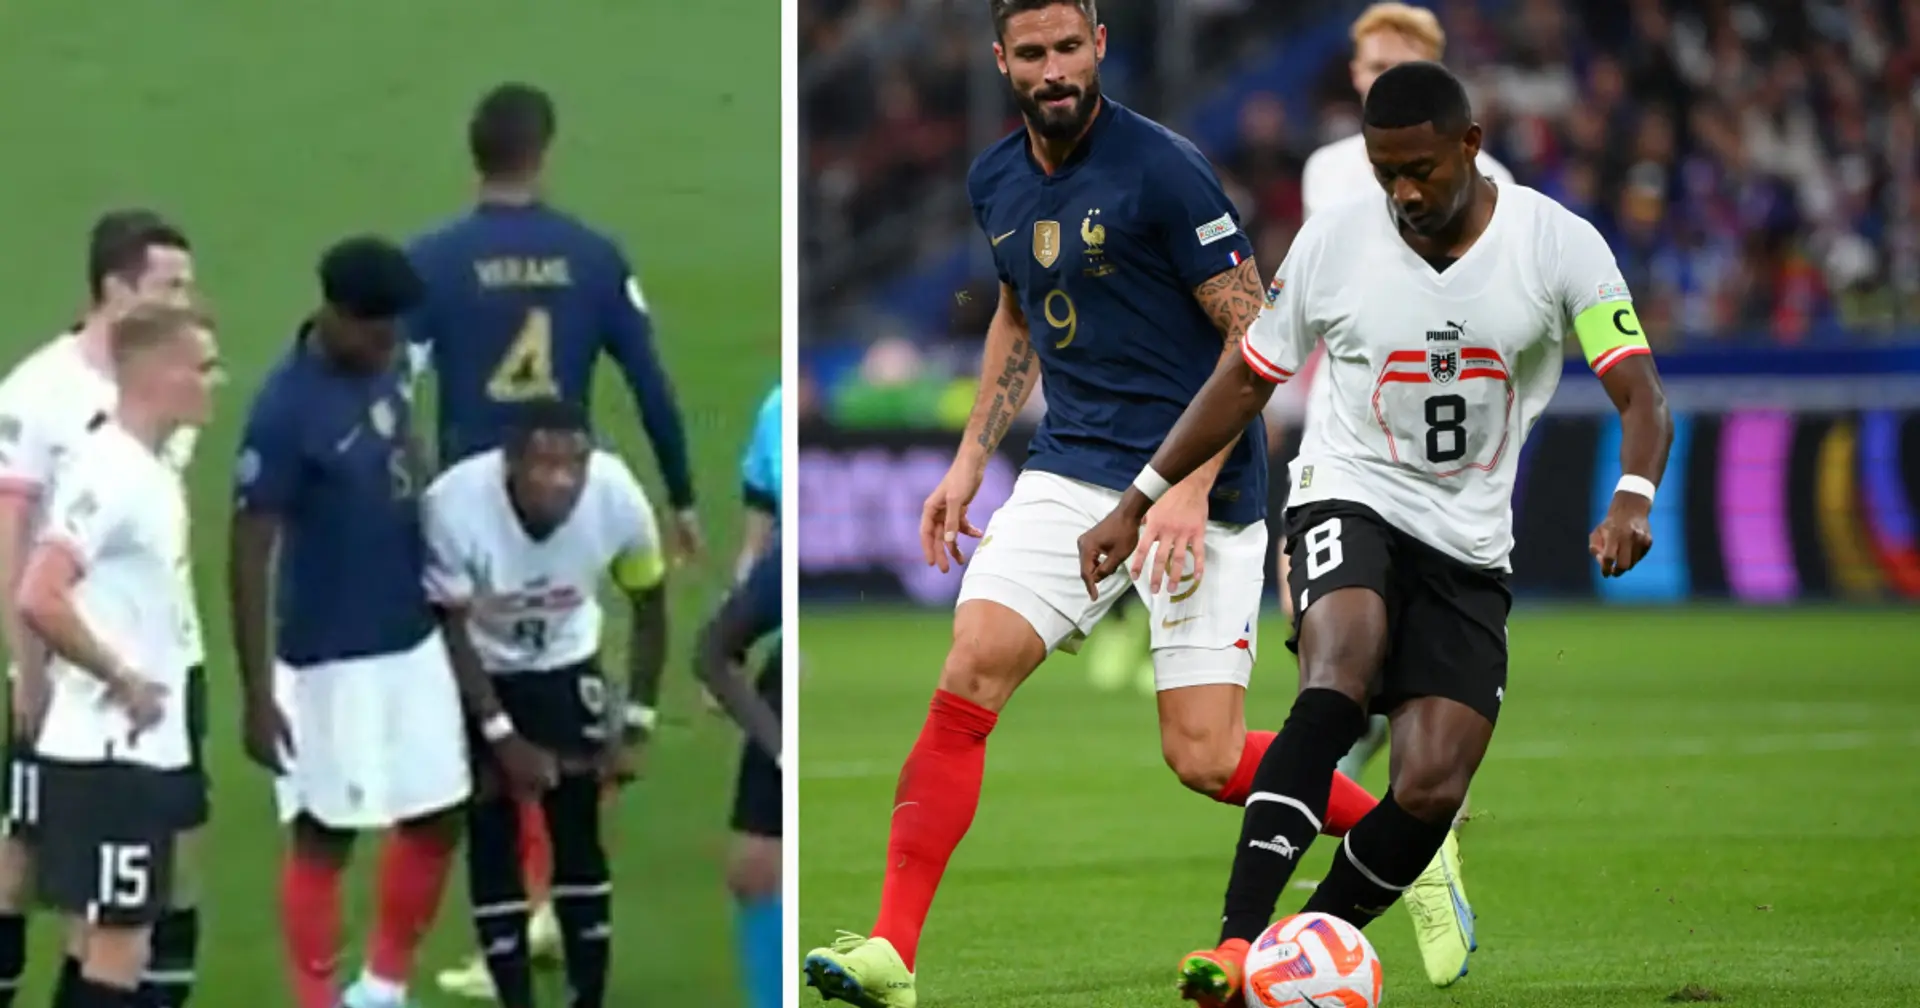 David Alaba seems to pick up injury on international duty for Austria